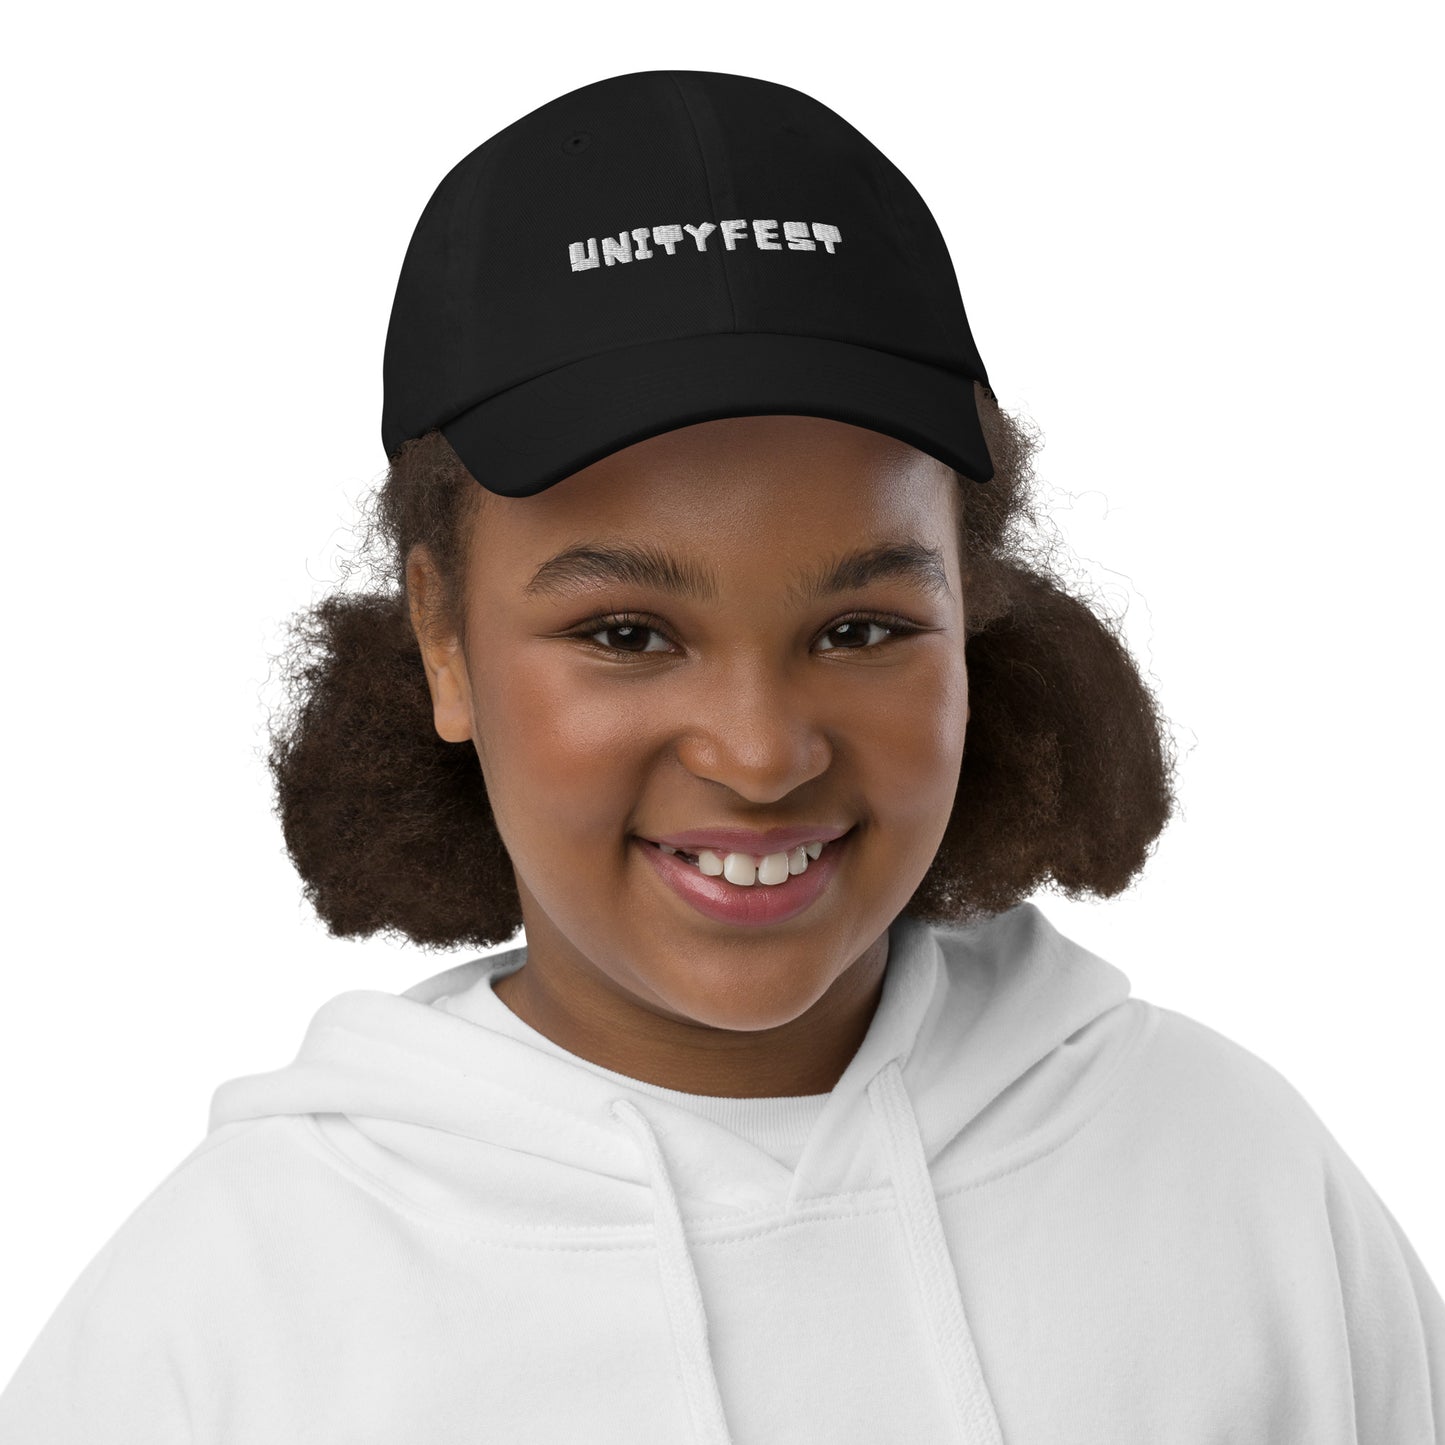 Unityfest Youth baseball cap